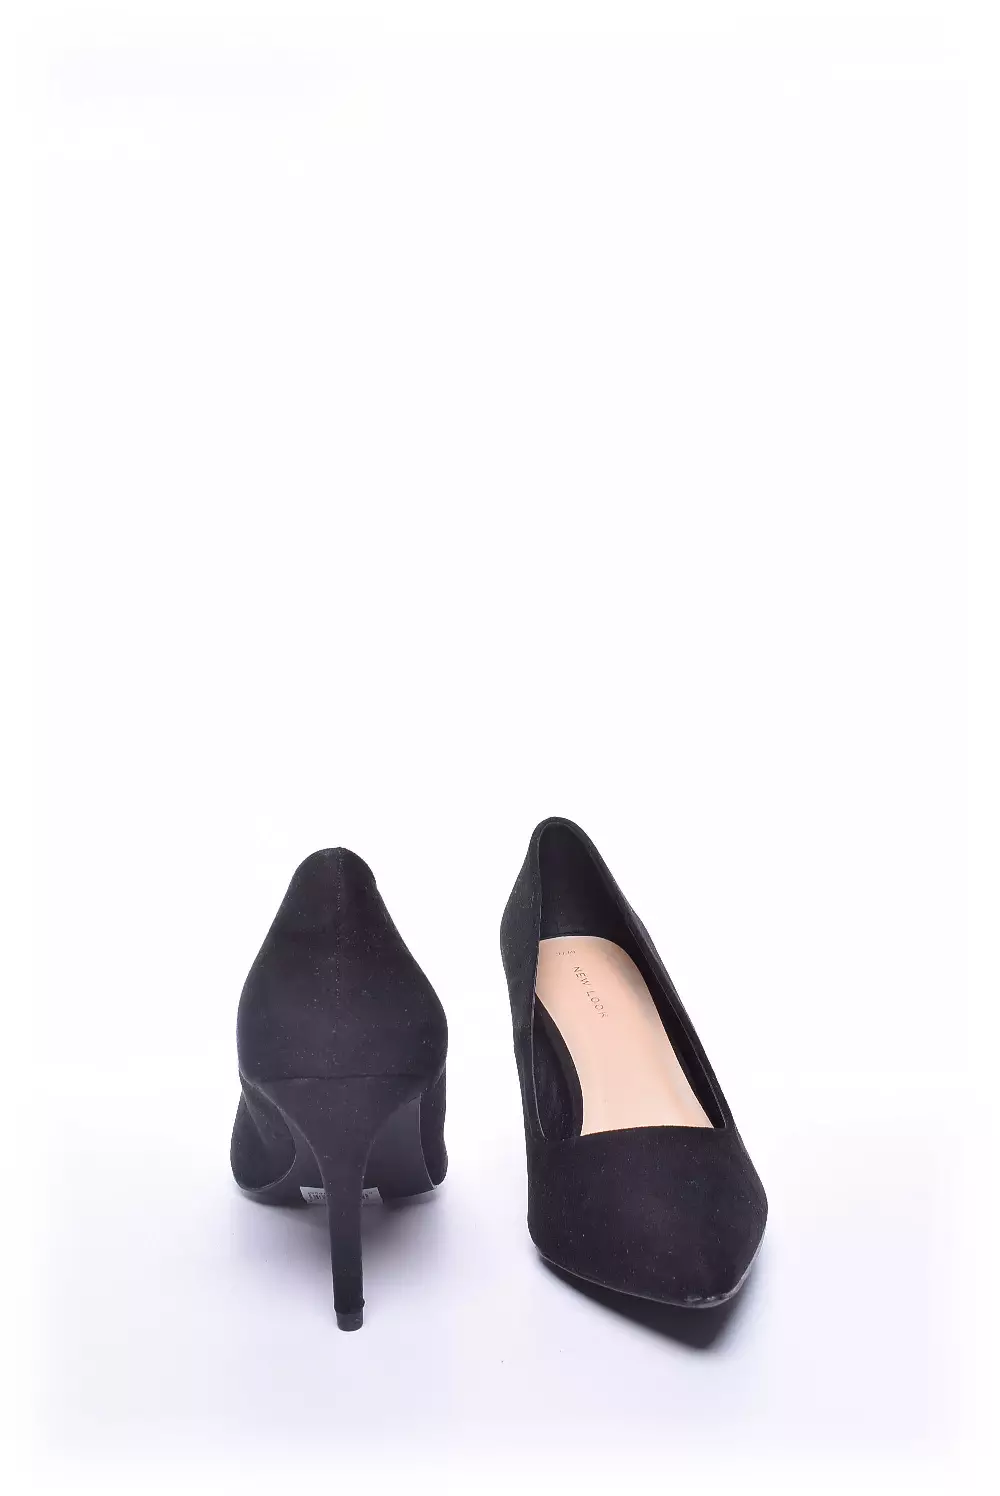 Pantofi dama stiletto [3]